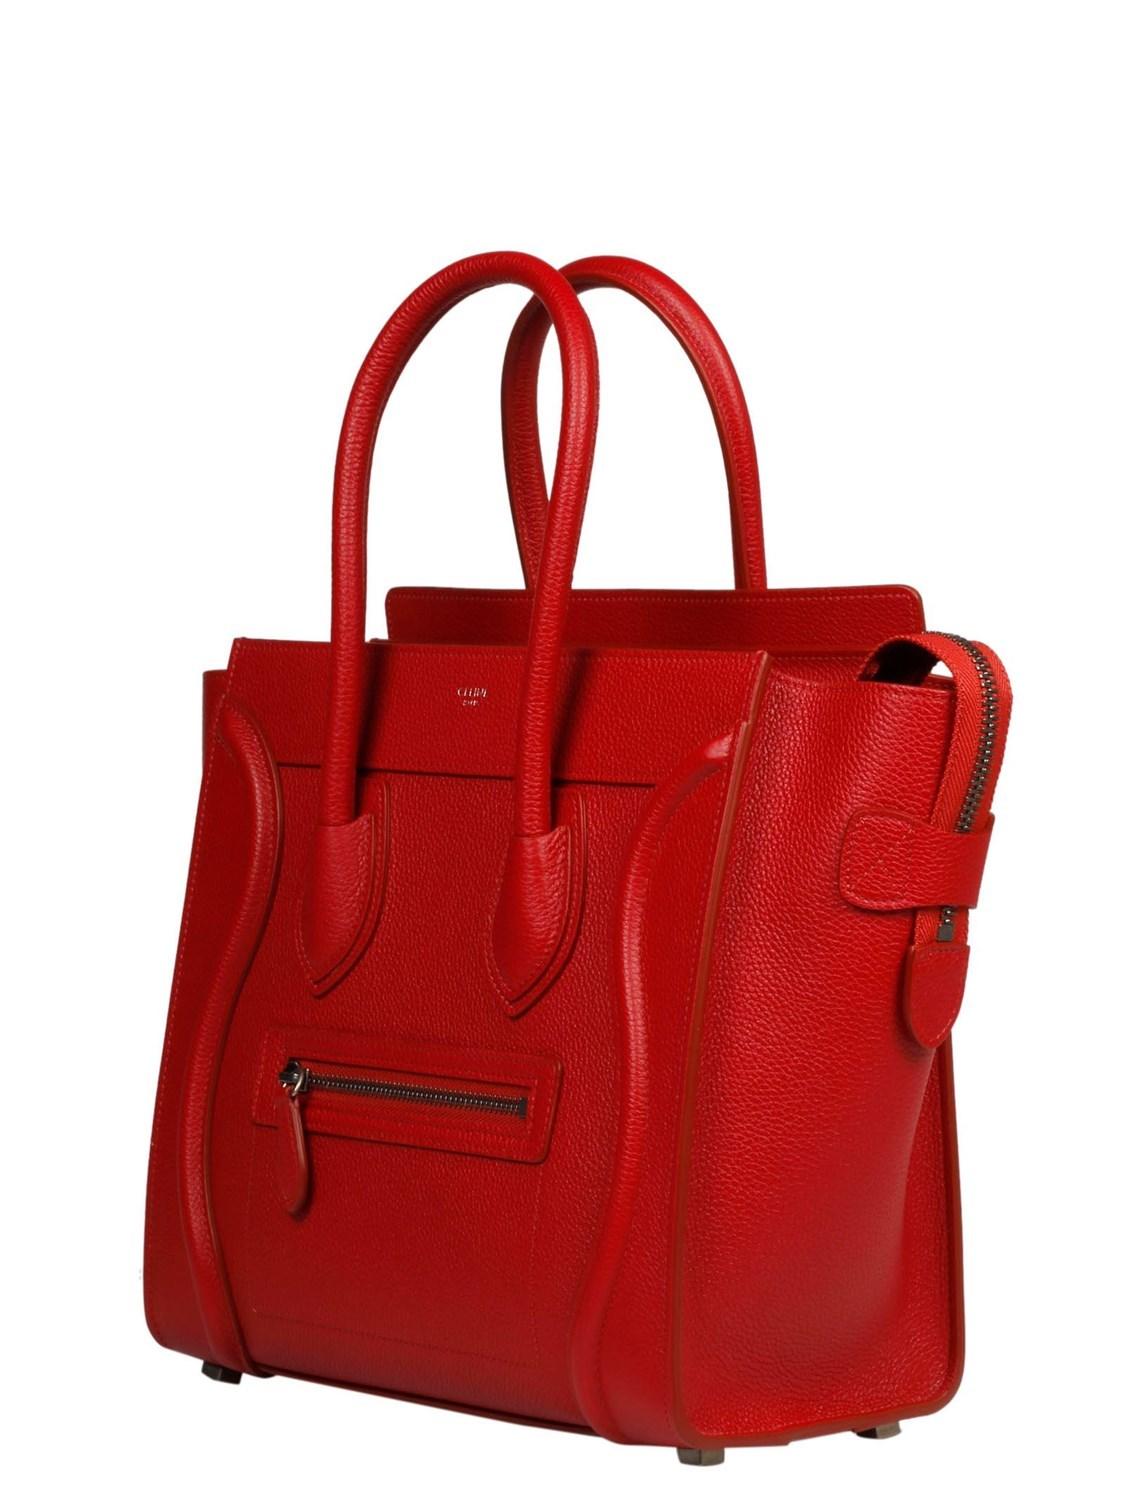 Celine Handbag Leather | semashow.com